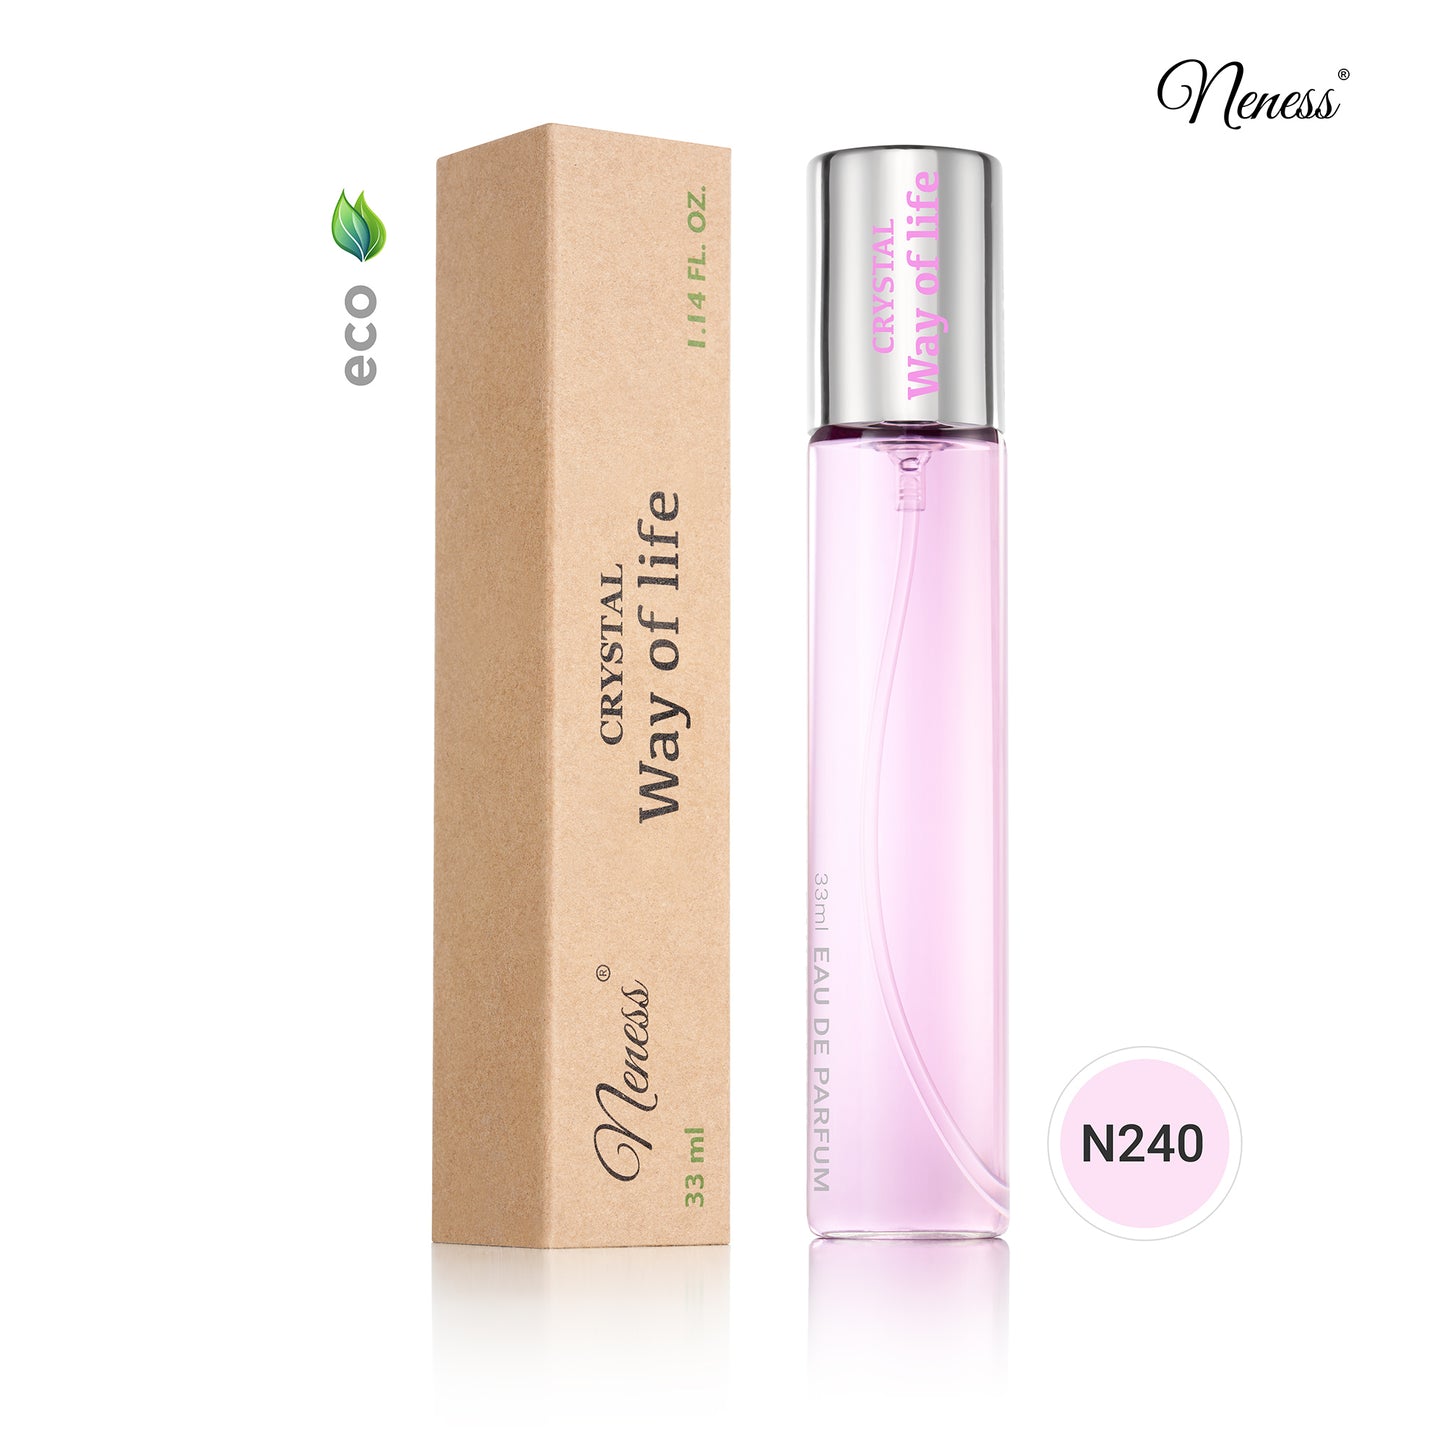 N240. Neness Crystal Way Of Life - 33 ml - Perfume For Women